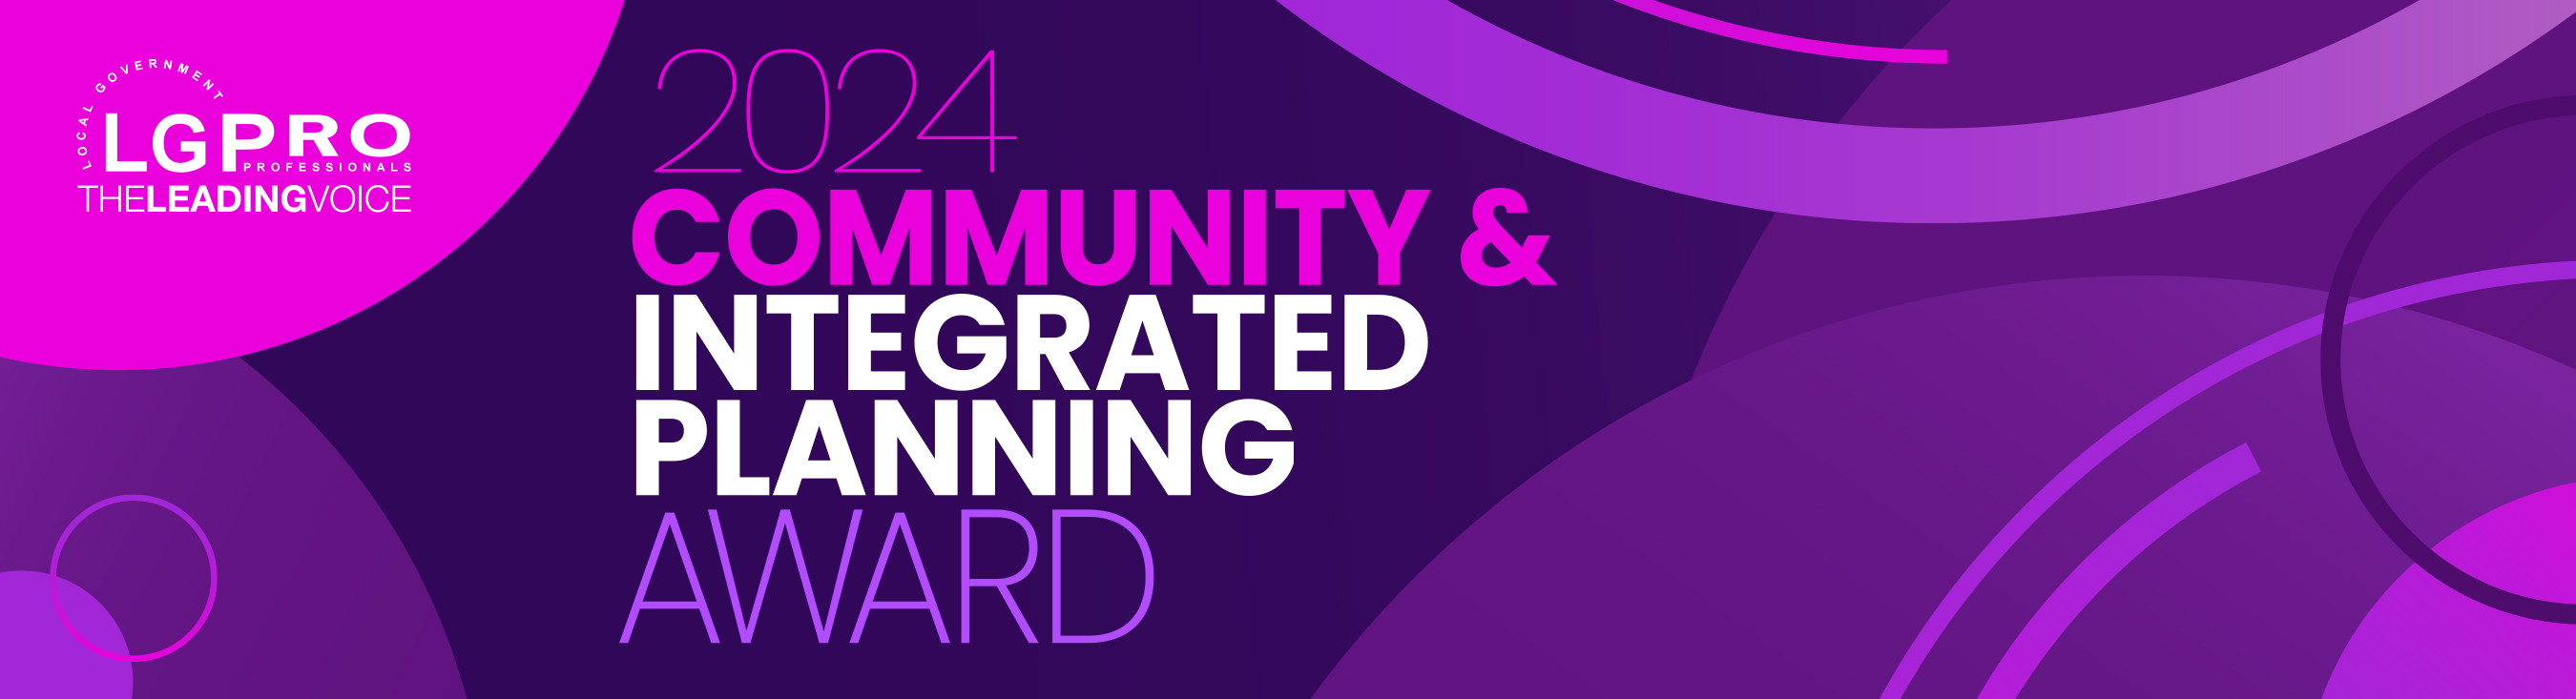 Community & Integrated Planning Award